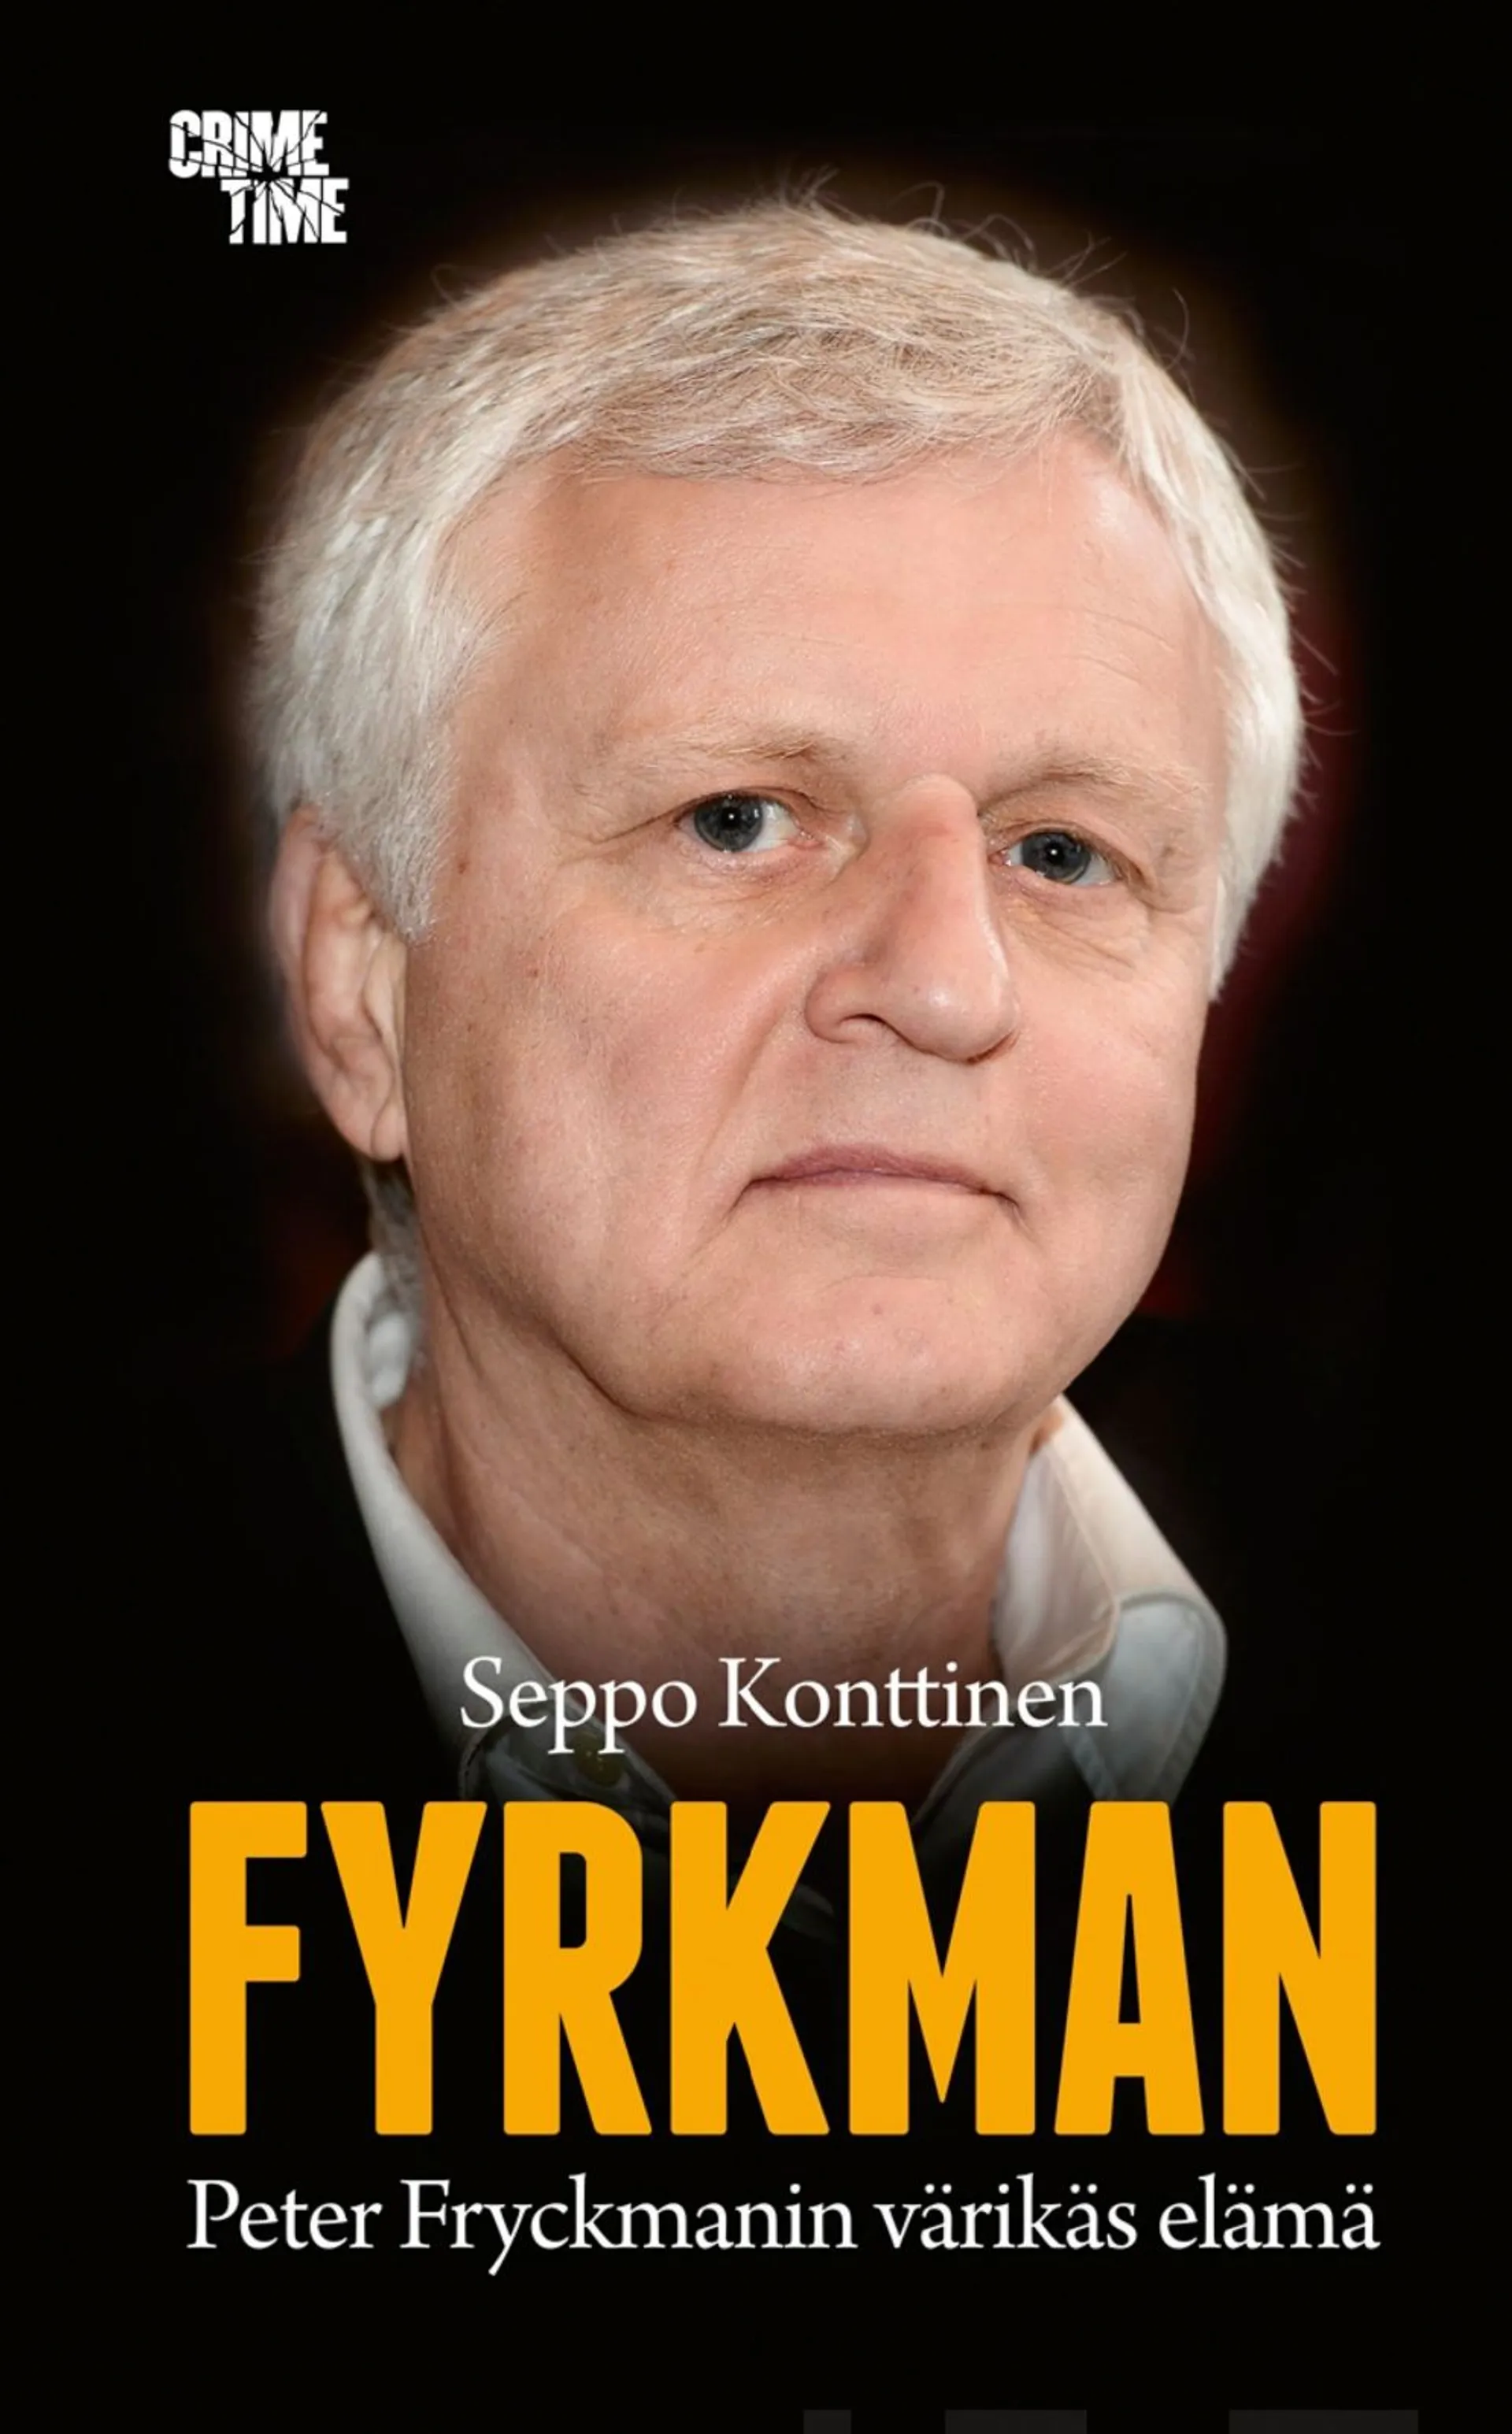 Konttinen, Fyrkman - Peter Fryckmanin värikäs elämä